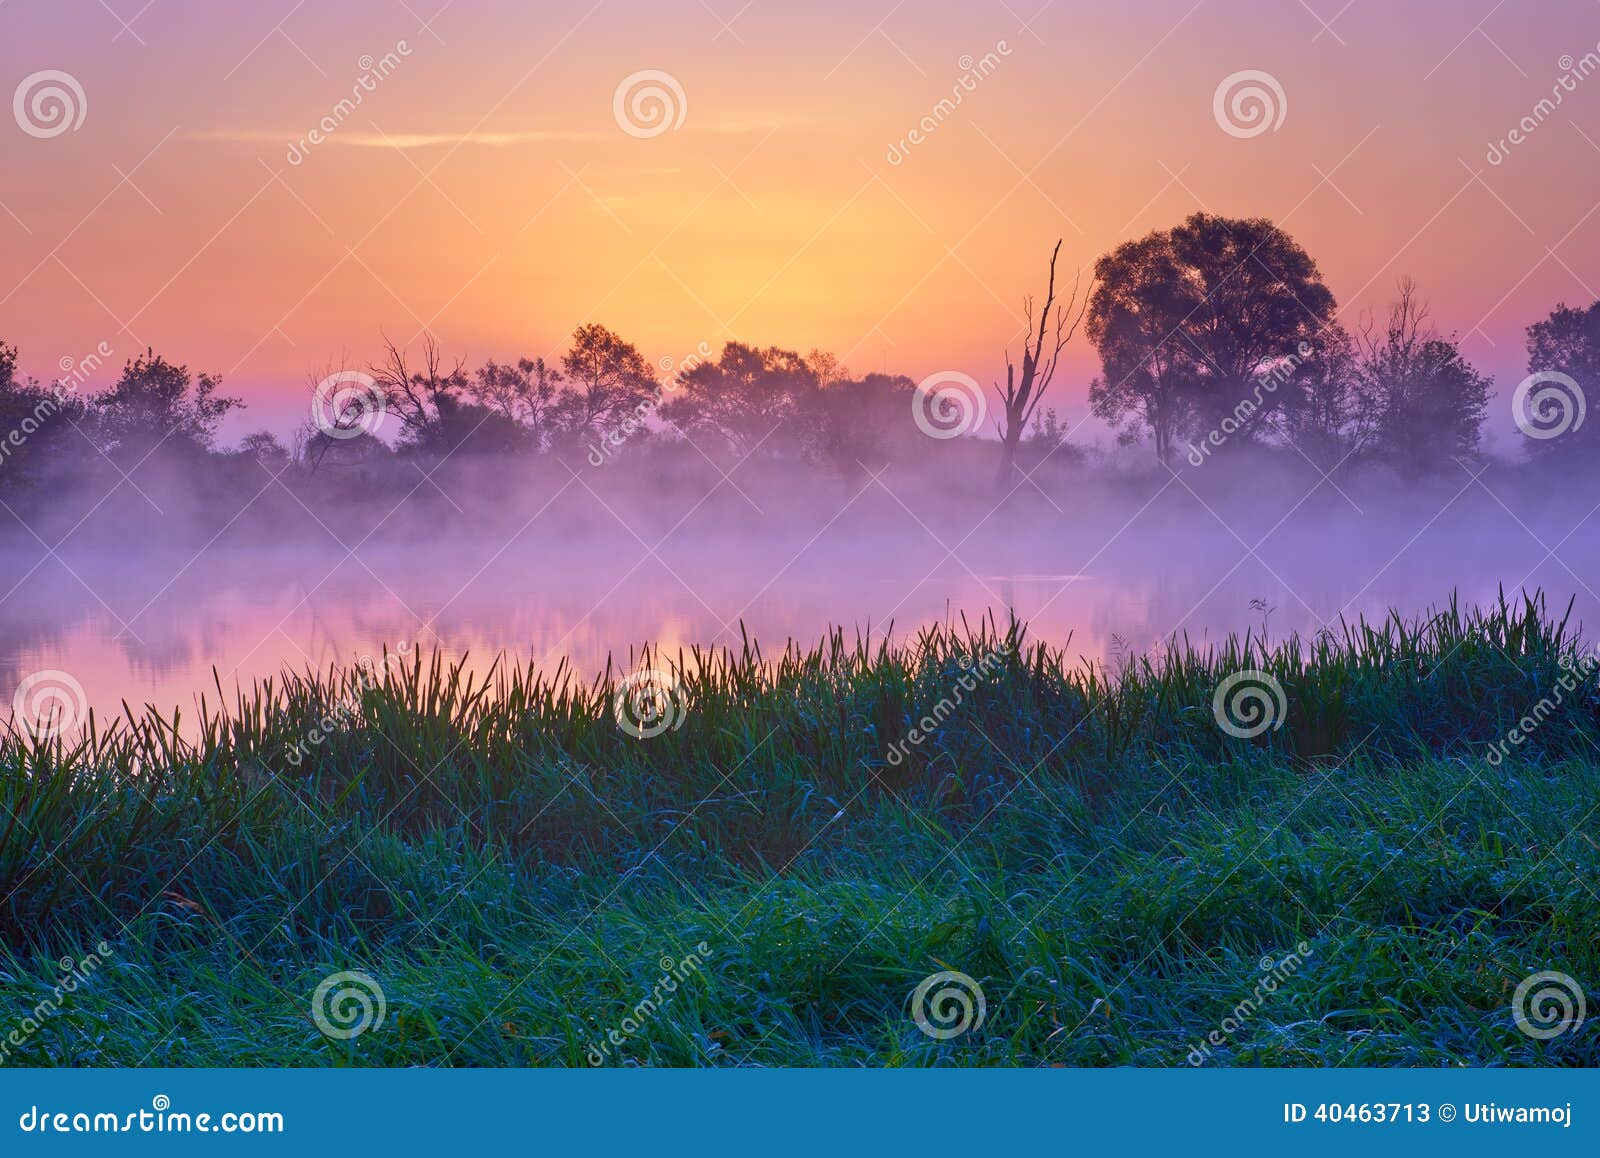 beautiful dawn narew river poland nature landscape